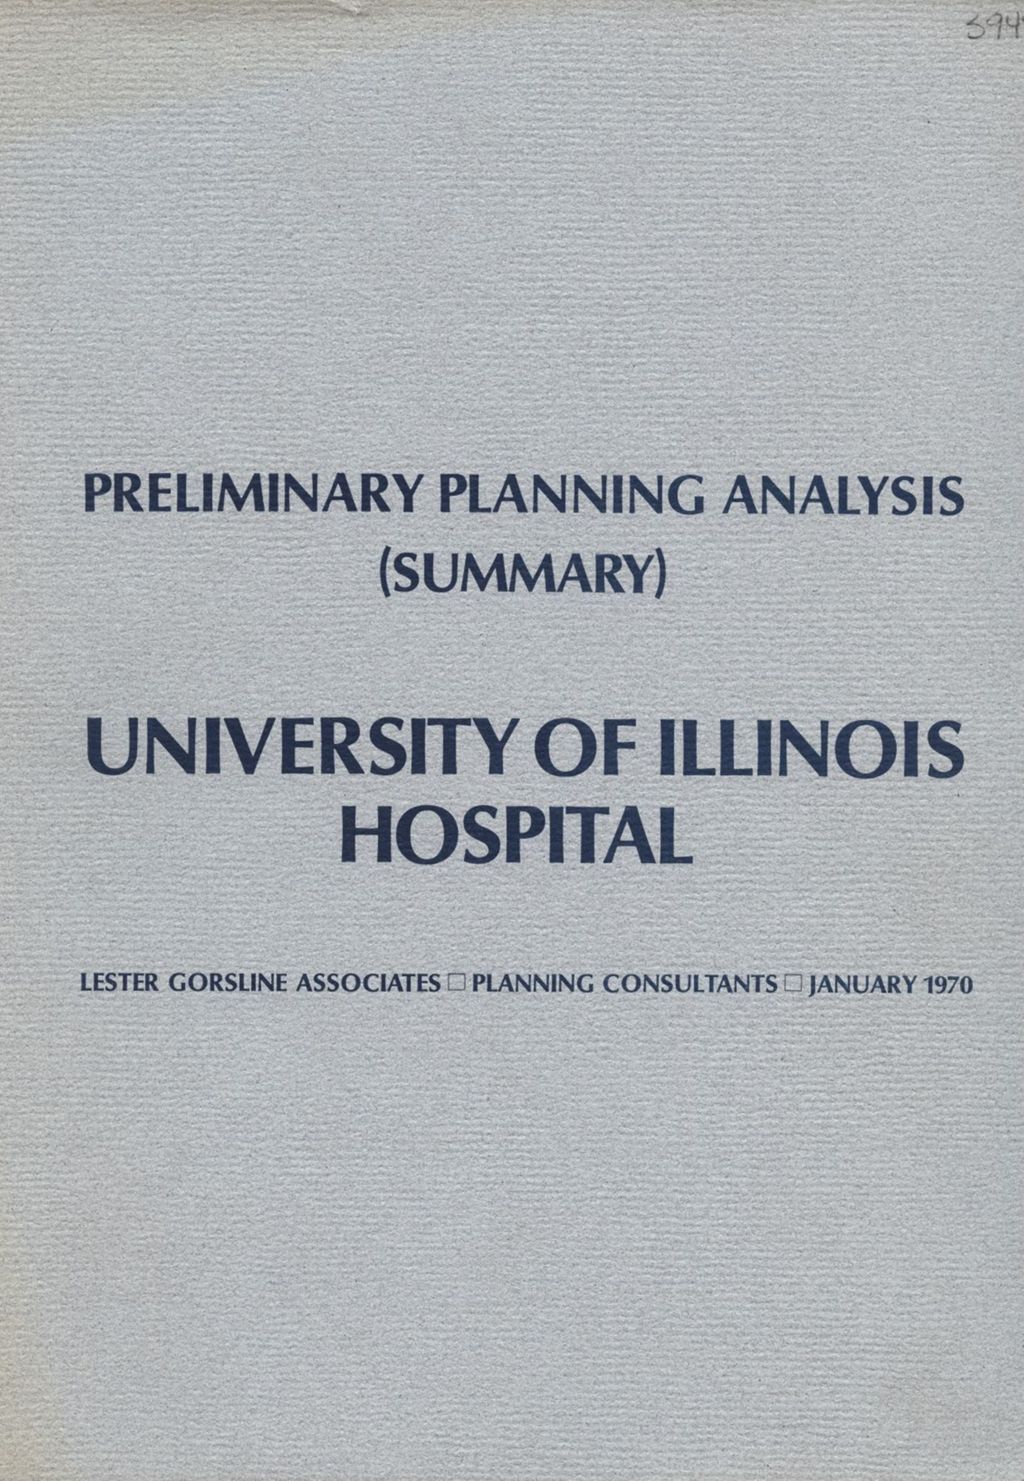 University of Illinois Hospital, Preliminary Planning Analysis (Summary)